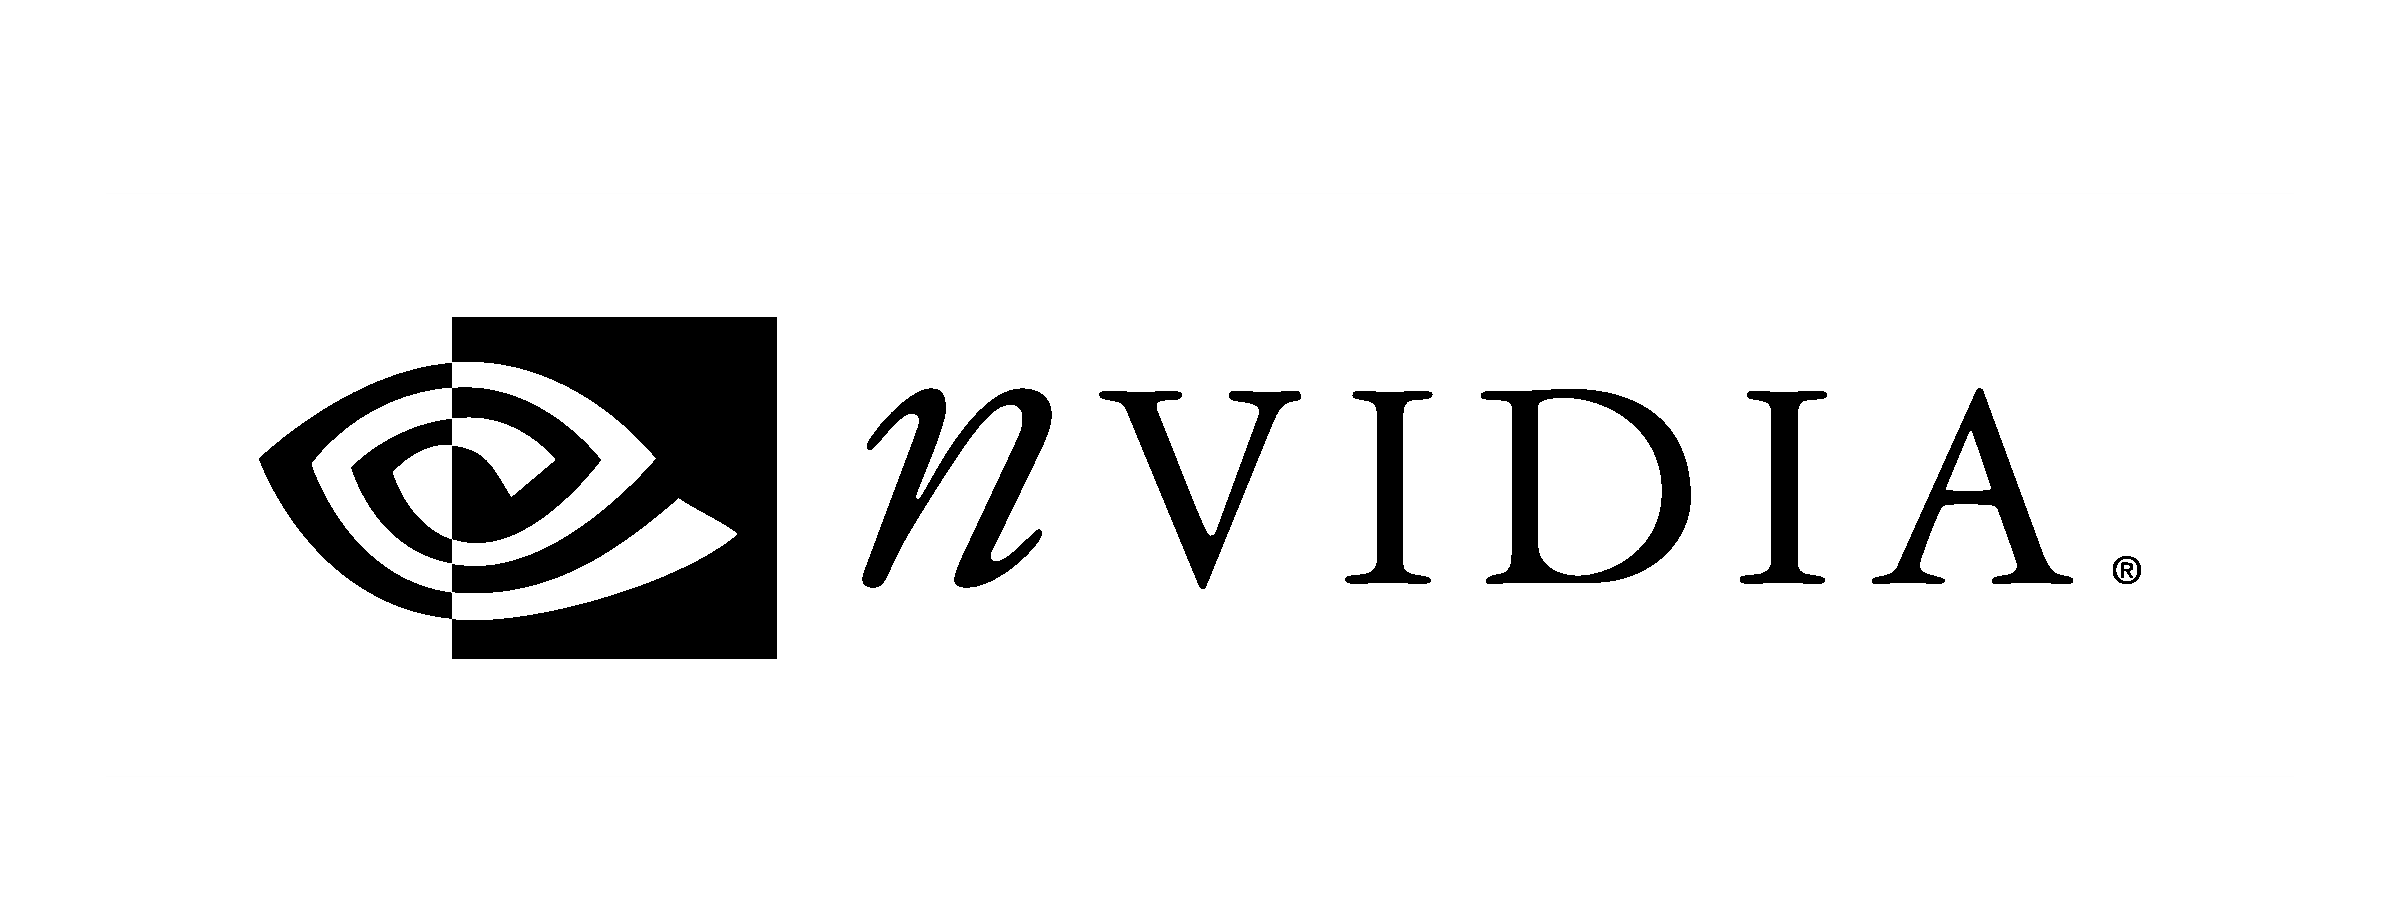 Nvidia Logo PNG Image Transparent Background